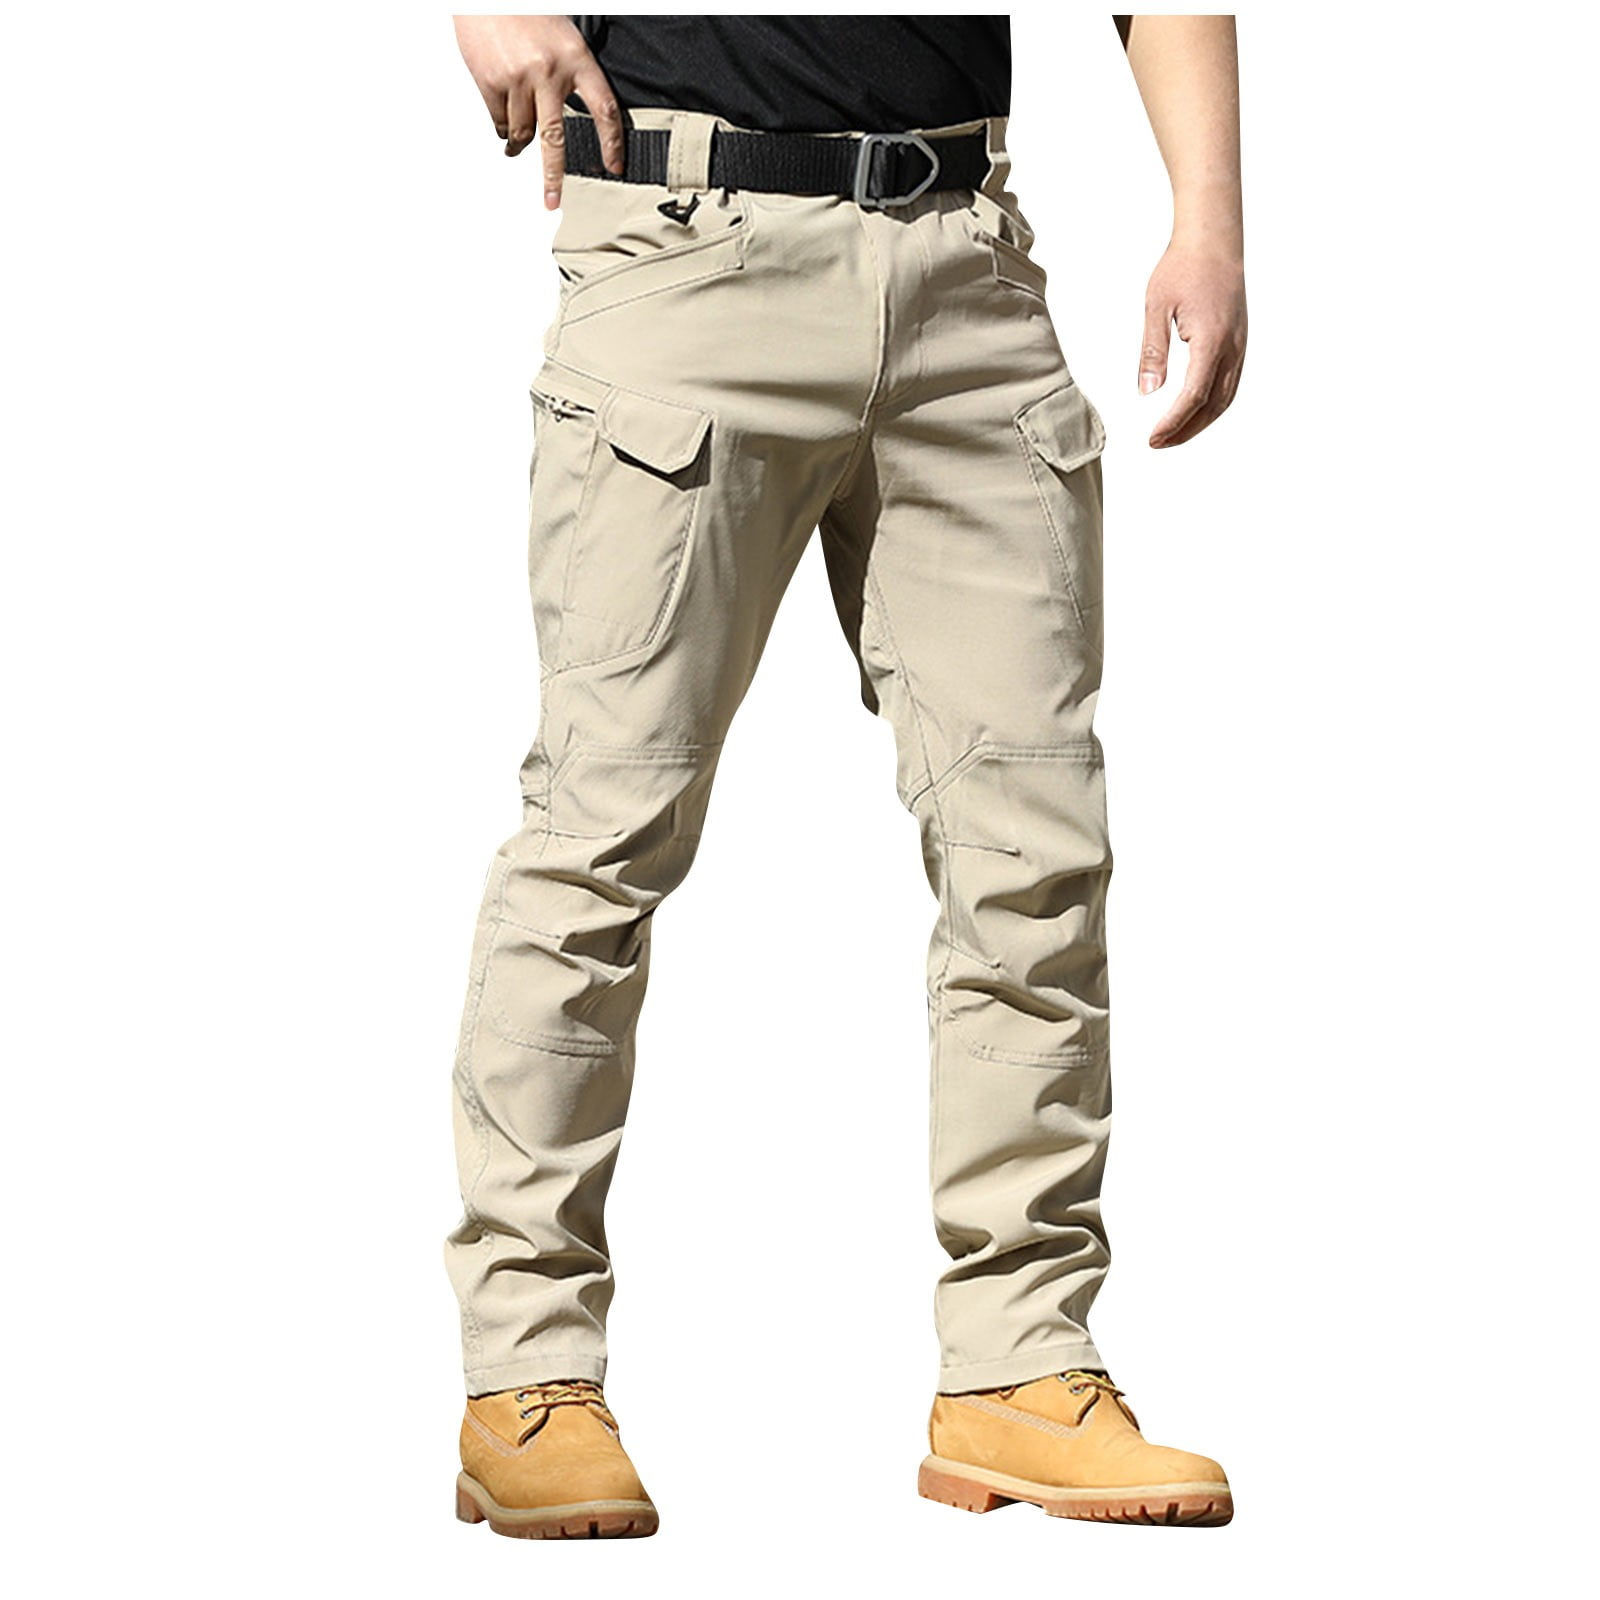 QWANG Men's Tactical Pants, Water Resistant Ripstop Cargo Pants ...